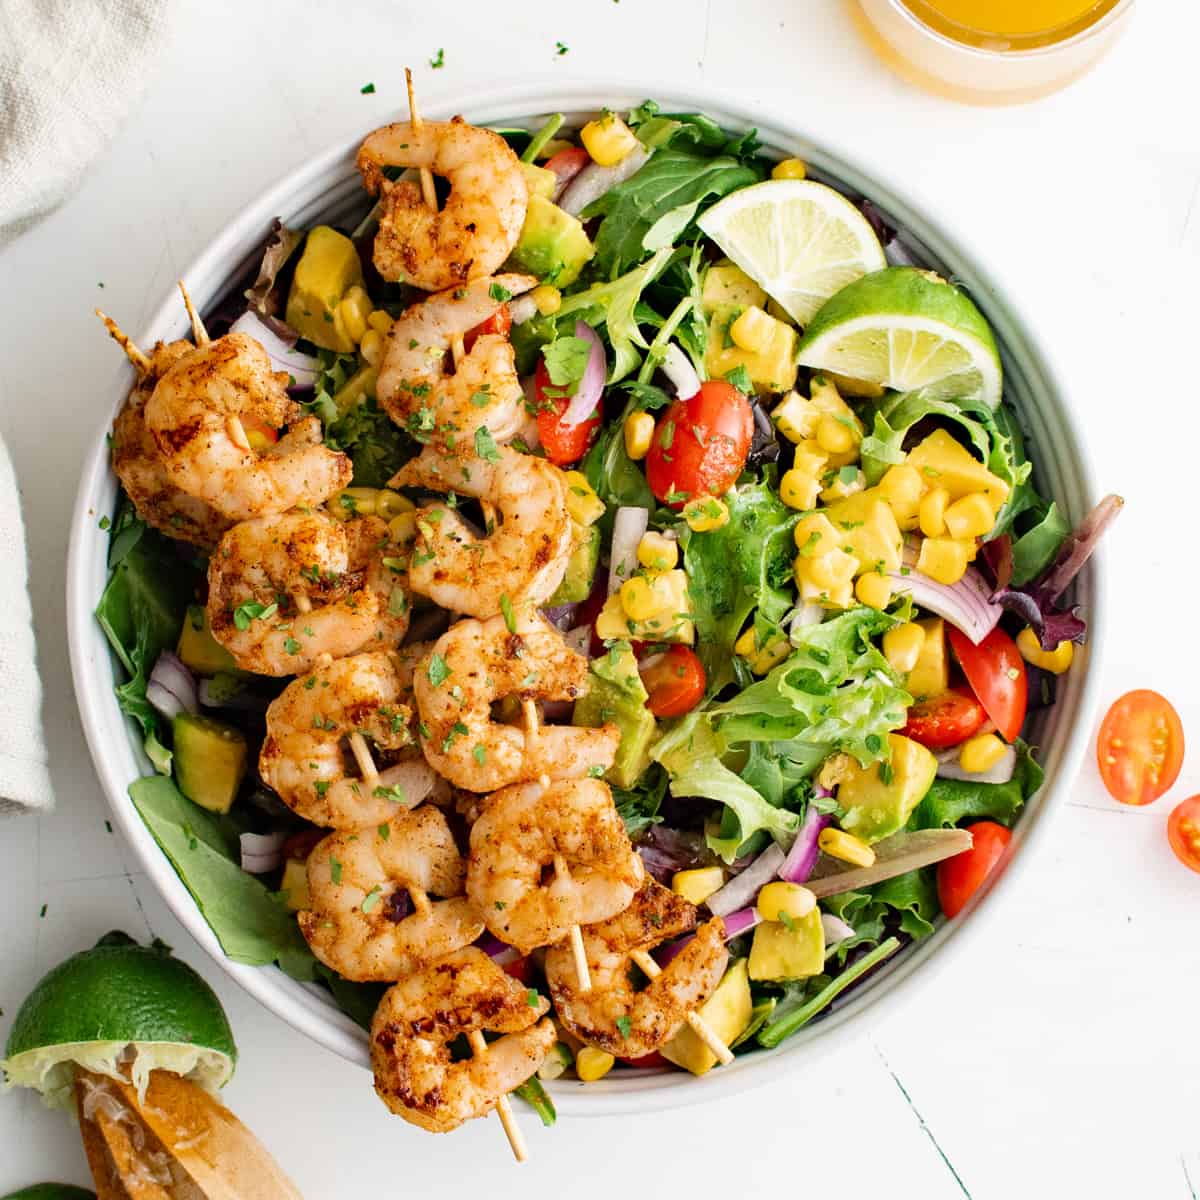 https://www.thecookierookie.com/wp-content/uploads/2022/12/Featured-Grilled-Shrimp-Salad-1.jpg